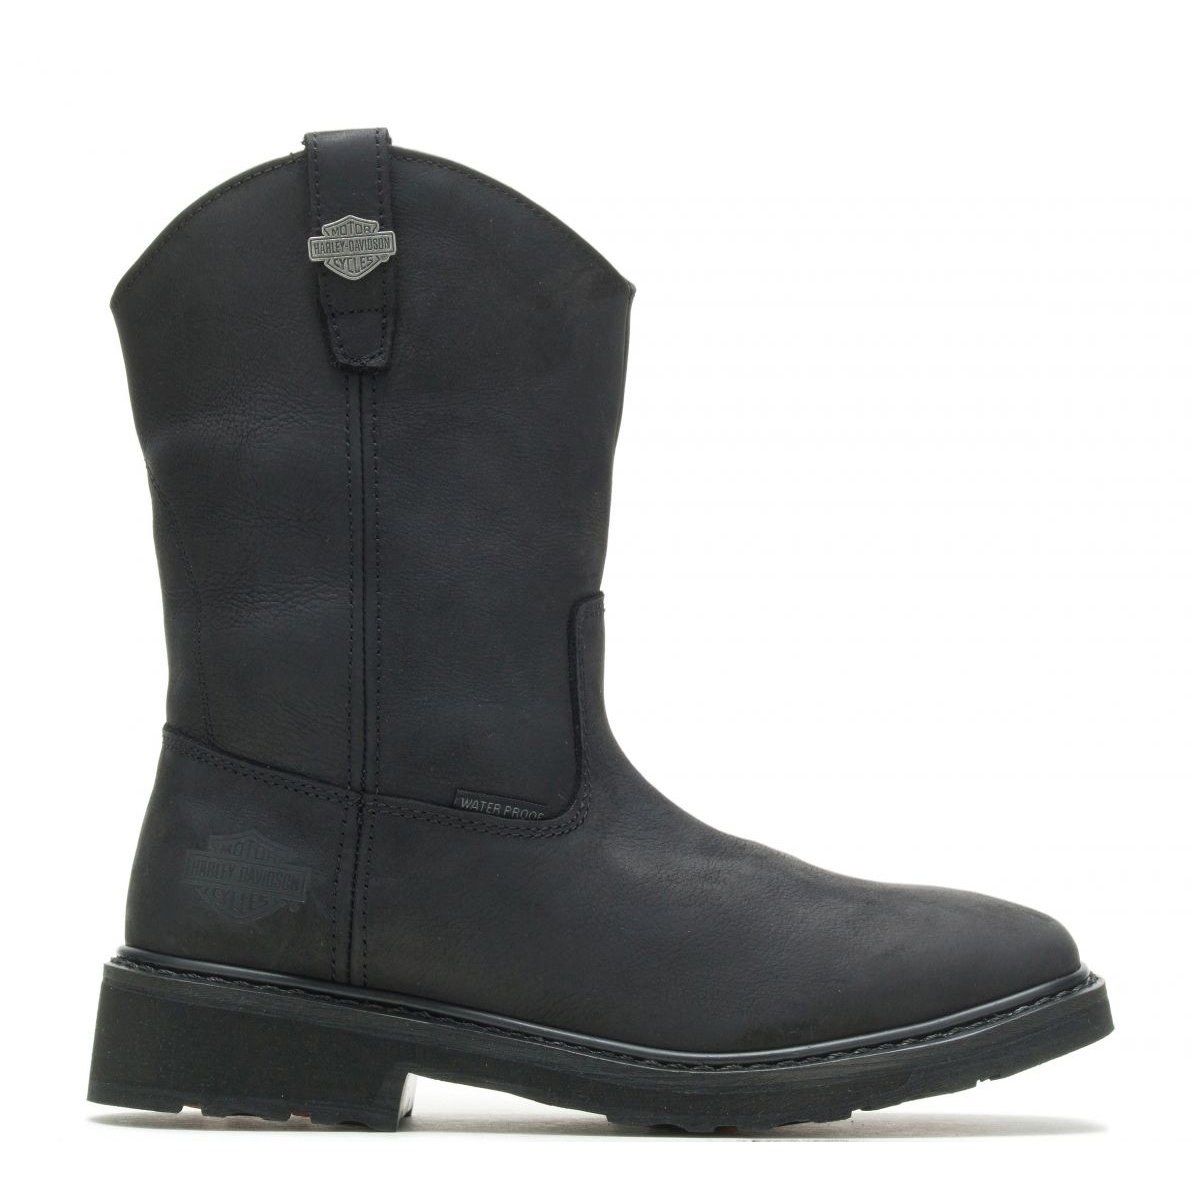 HARLEY-DAVIDSON WORK Men's Altman Western Classic Soft Toe Work Boot Black - D93561 Black/black - Black/black, 8.5